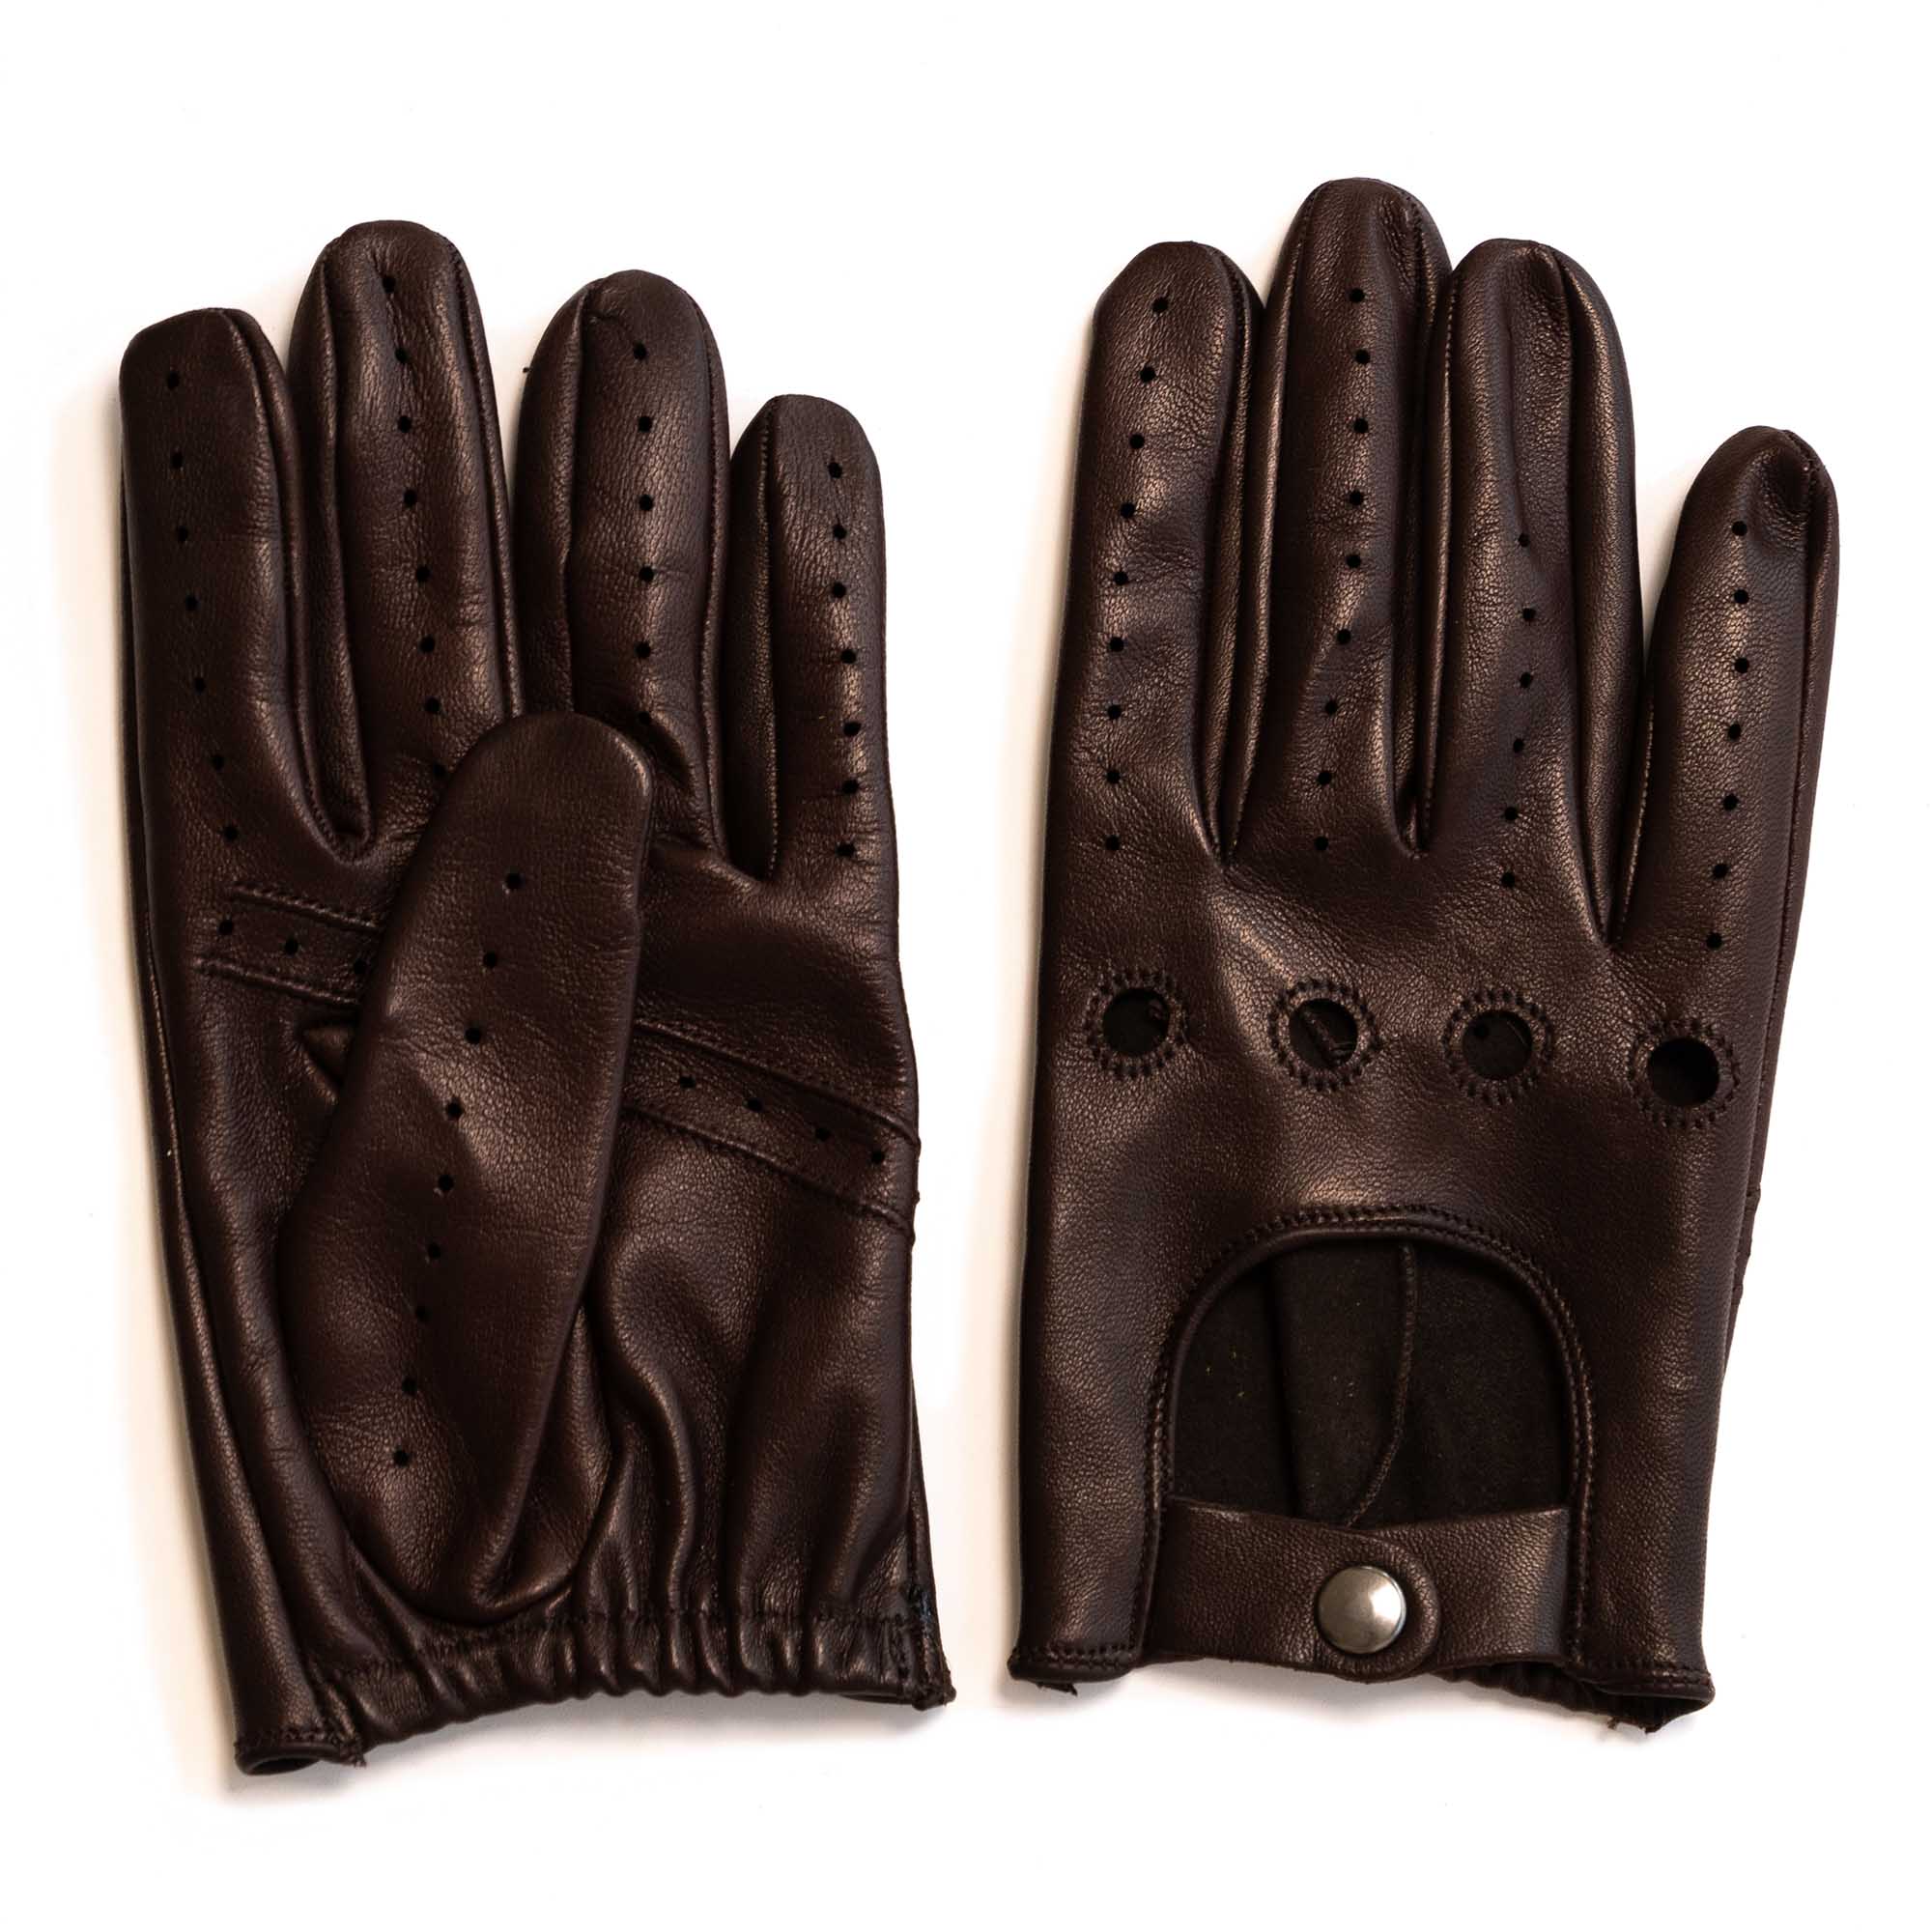 "Nino" Testa di Moro Leather Gloves